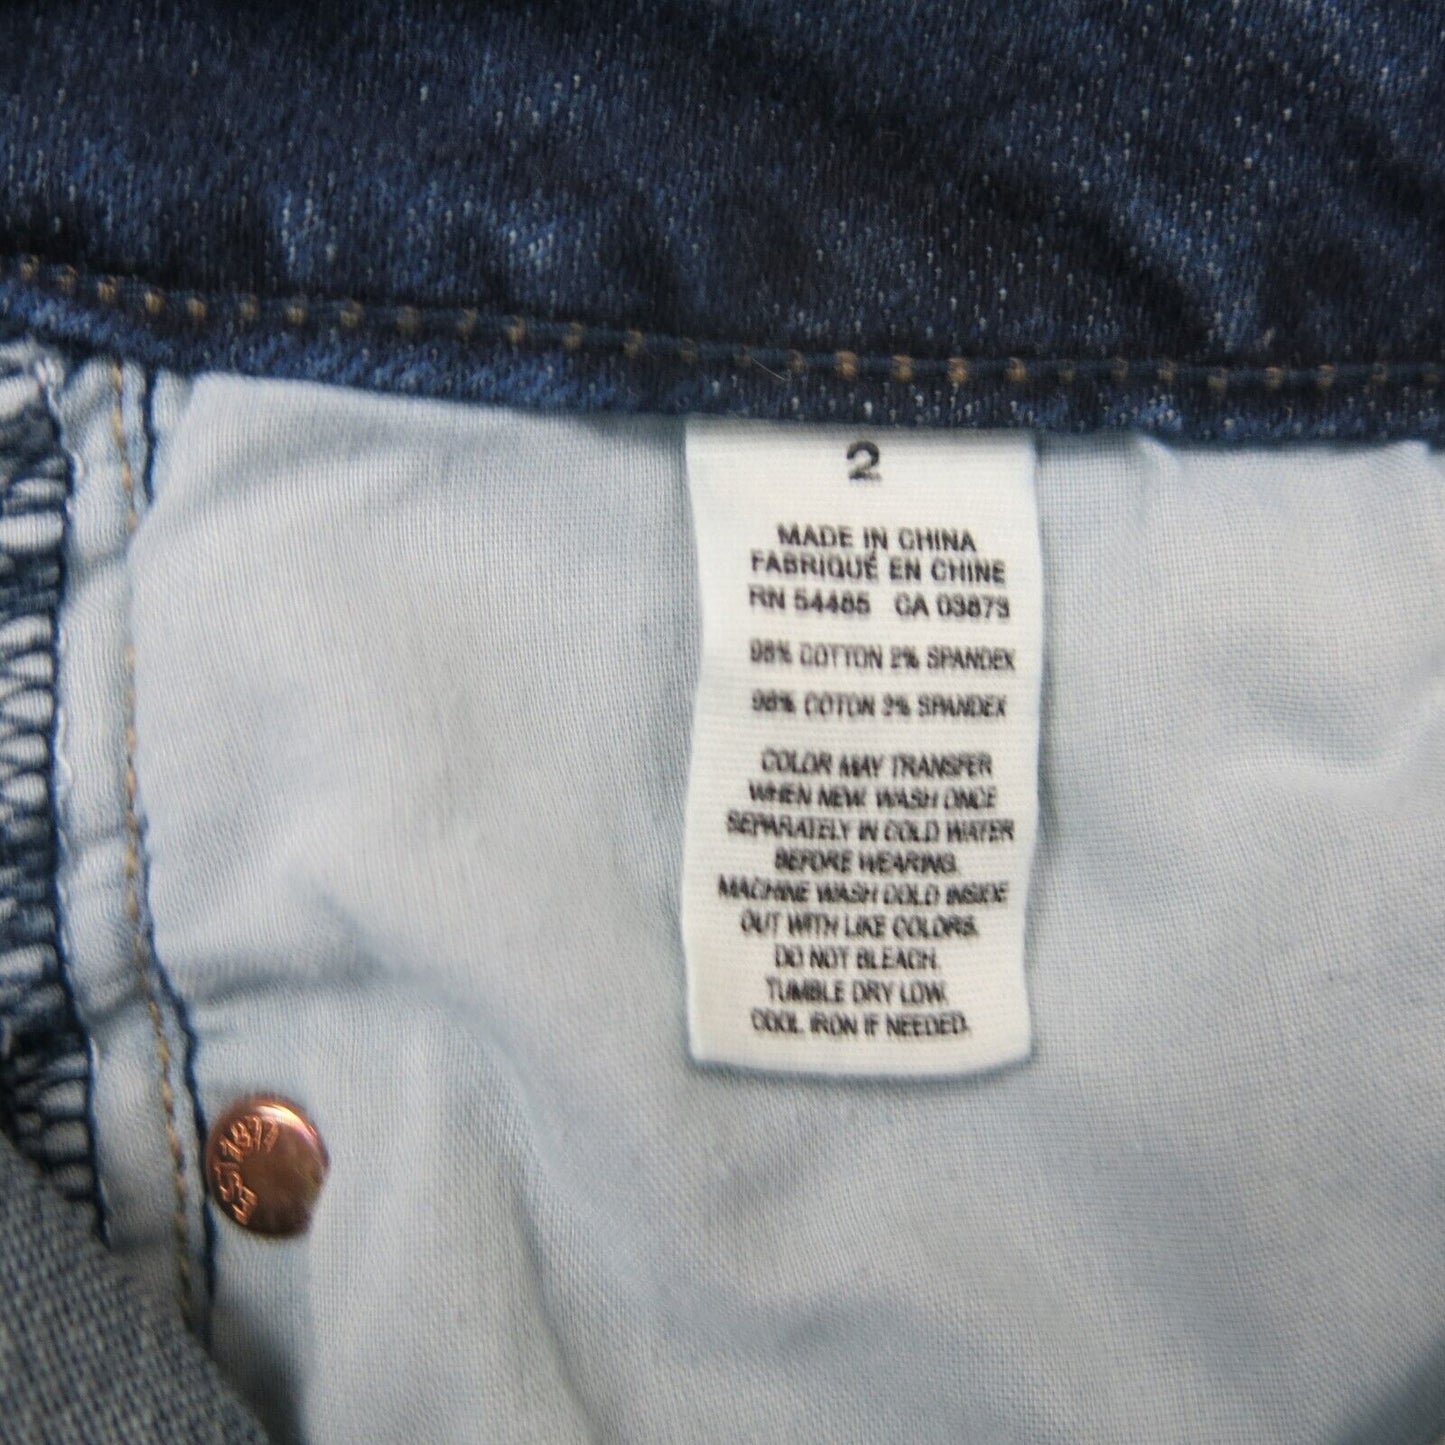 American Eagle Womens Denim Shorts Stretch Cotton Five Pockets Blue Size US 2